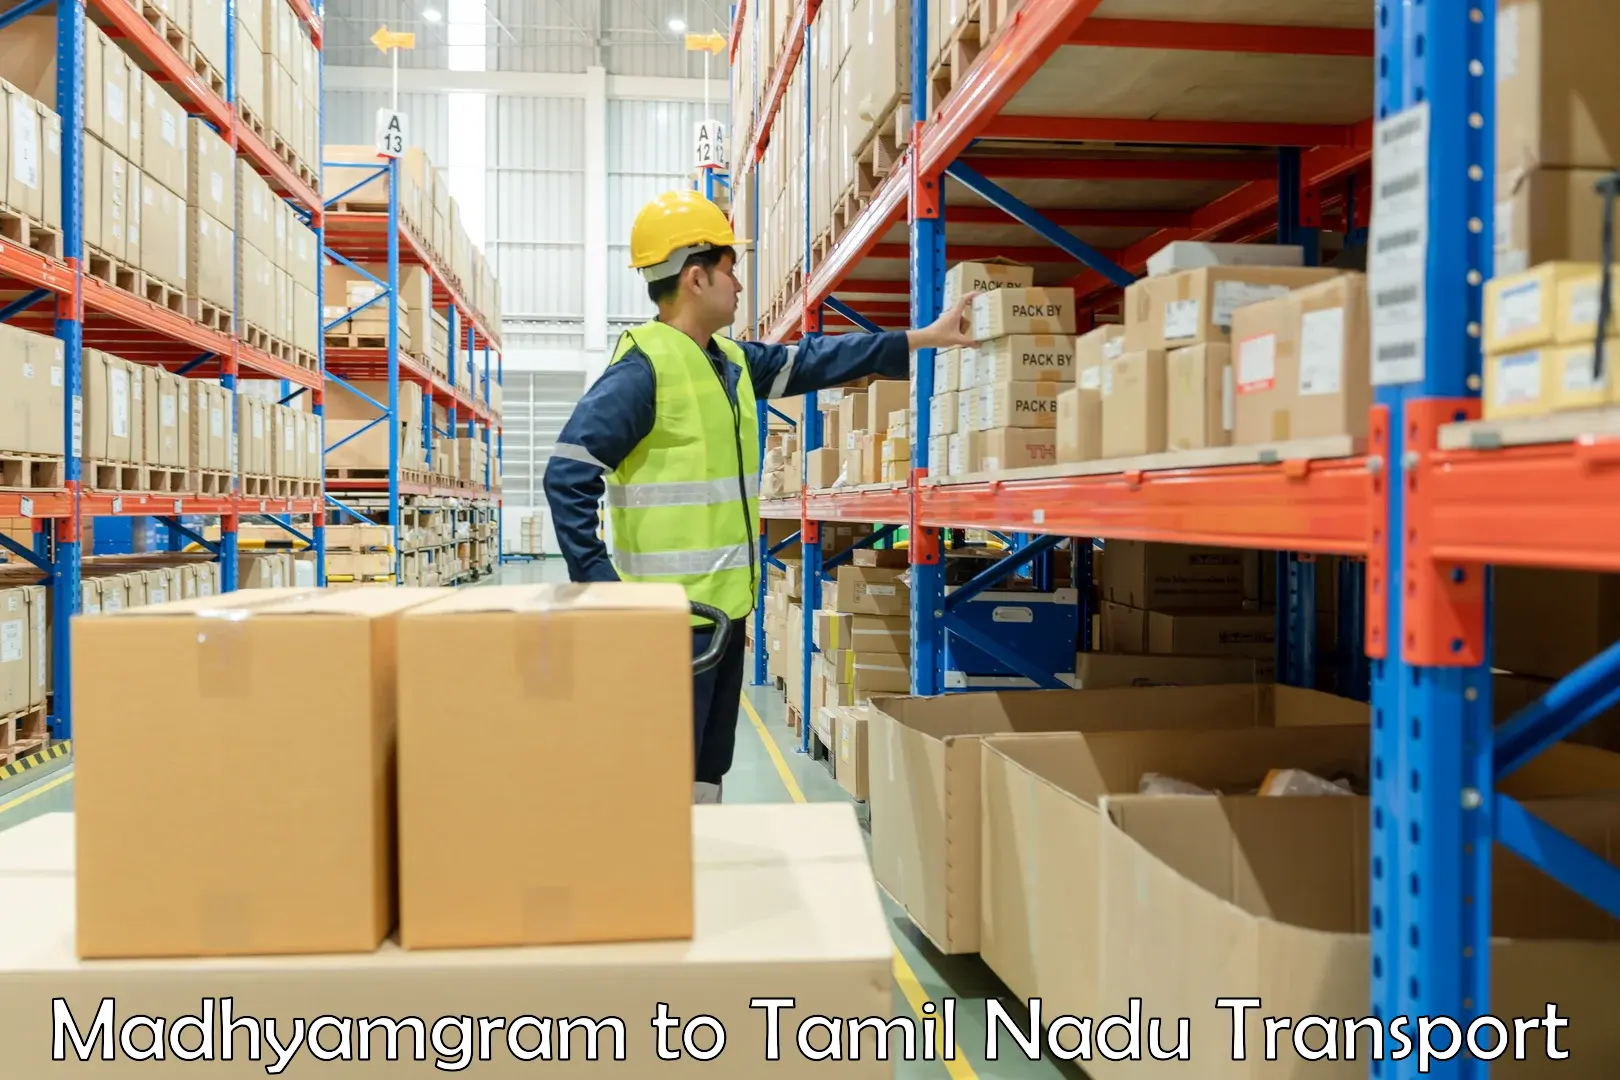 Shipping partner Madhyamgram to Ennore Port Chennai